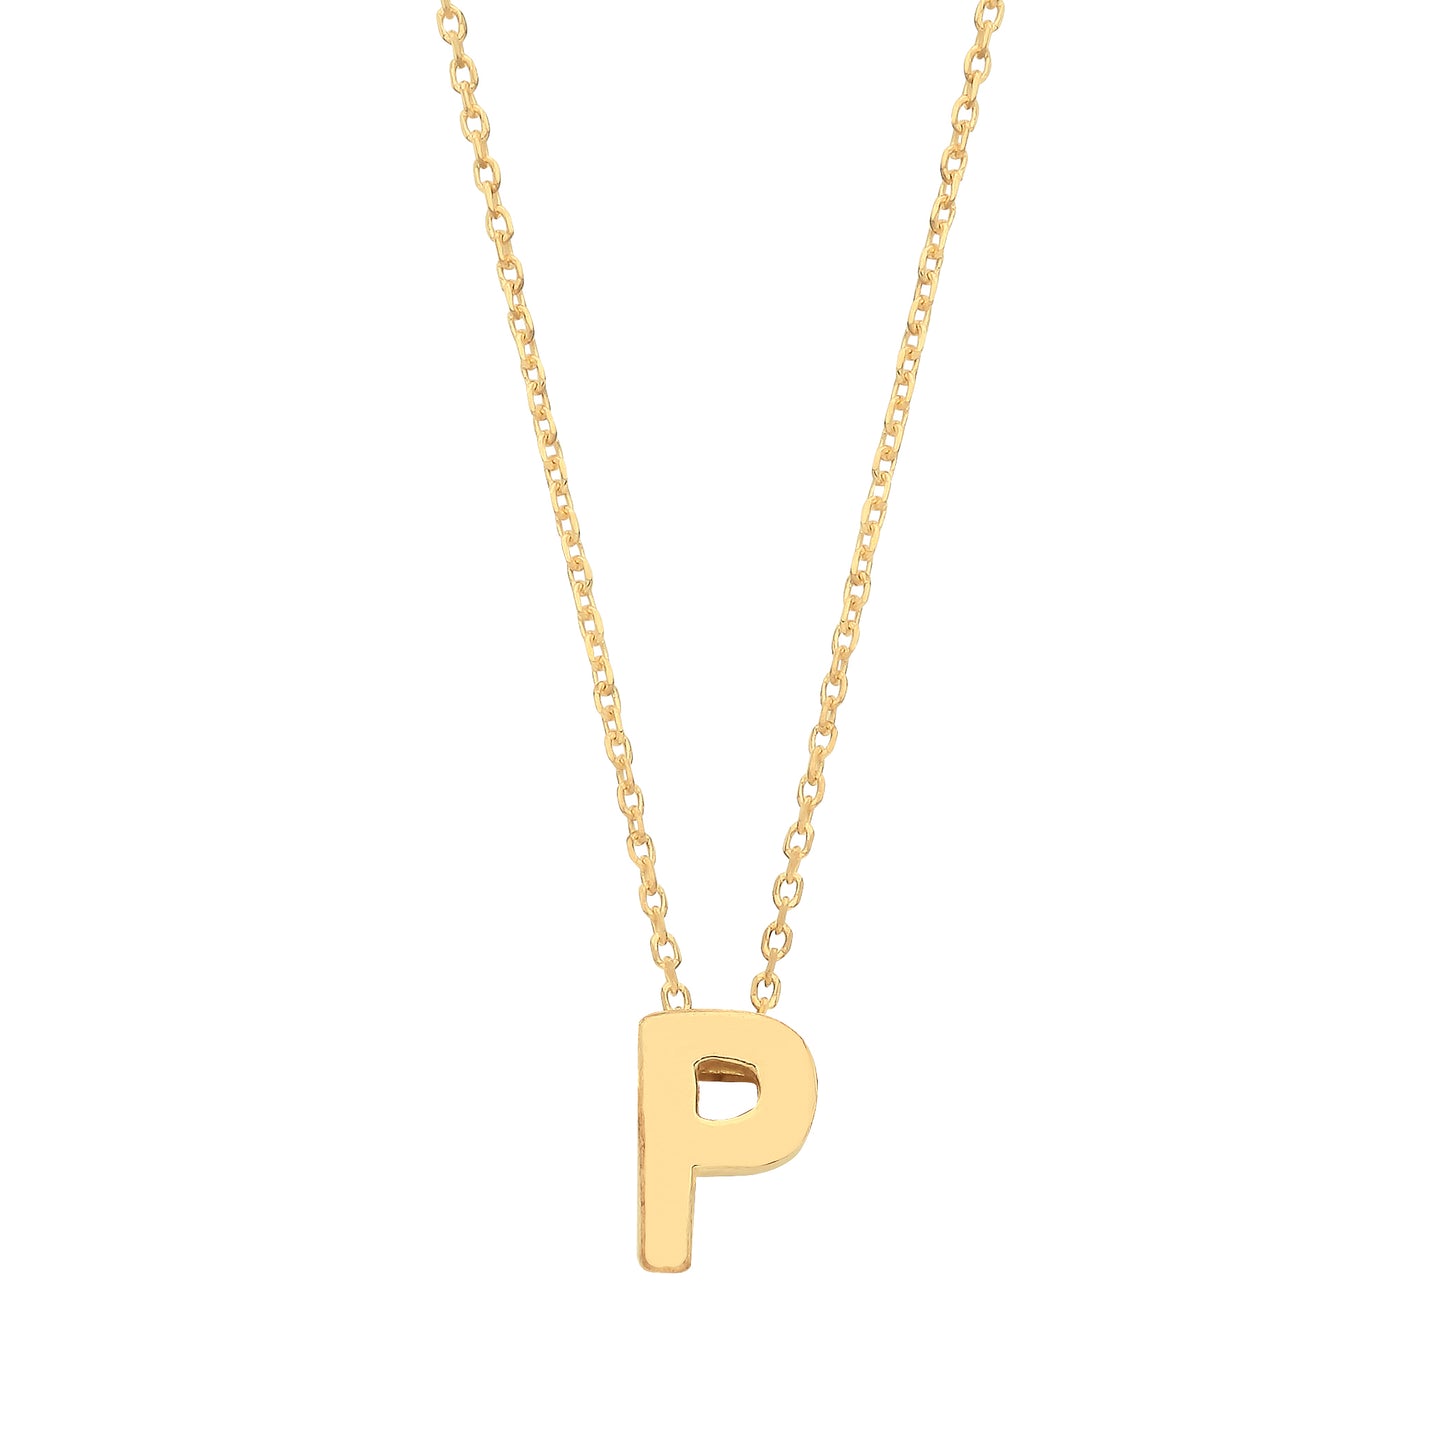 9ct Gold  Letter P Initial Pendant Necklace 17 inch 43cm - G9P6032P